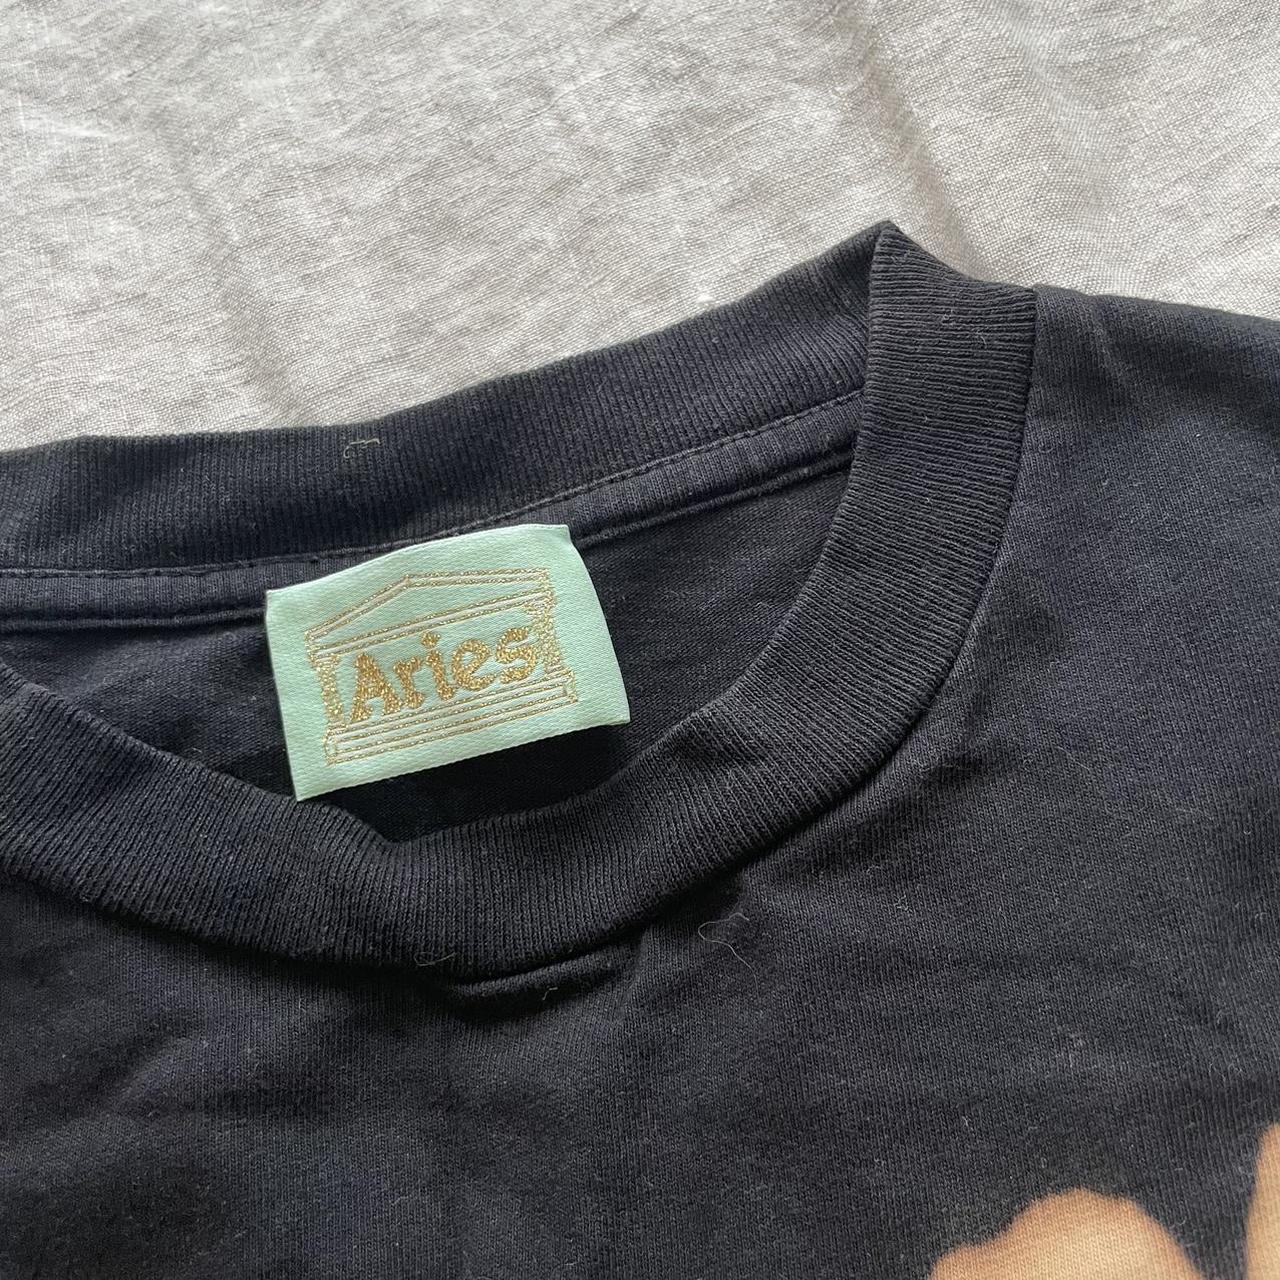 Aries Arise Women's Black and Tan T-shirt (4)